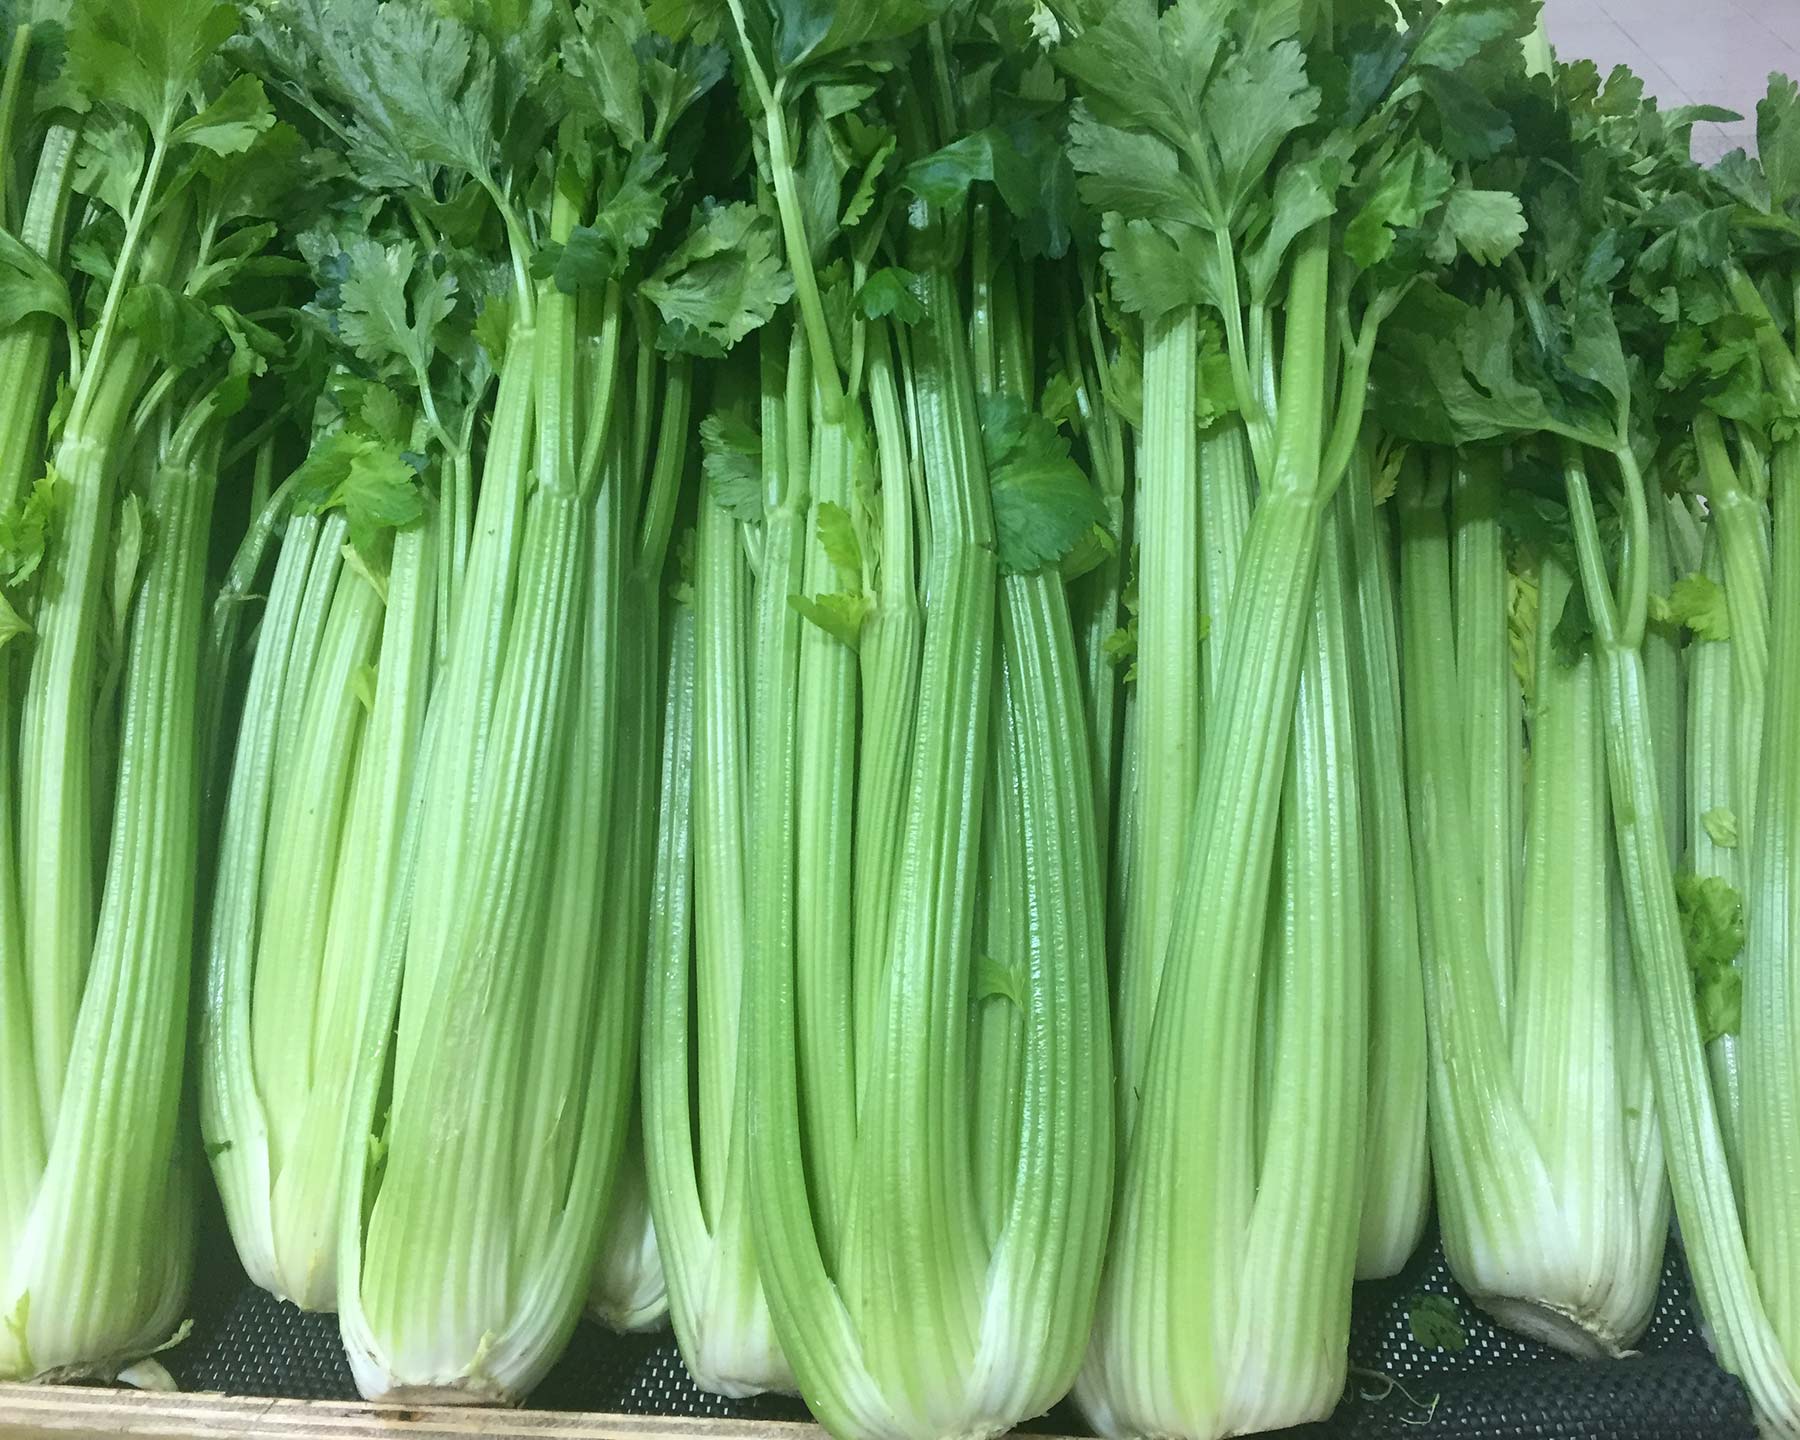 Apium graveolens, celery